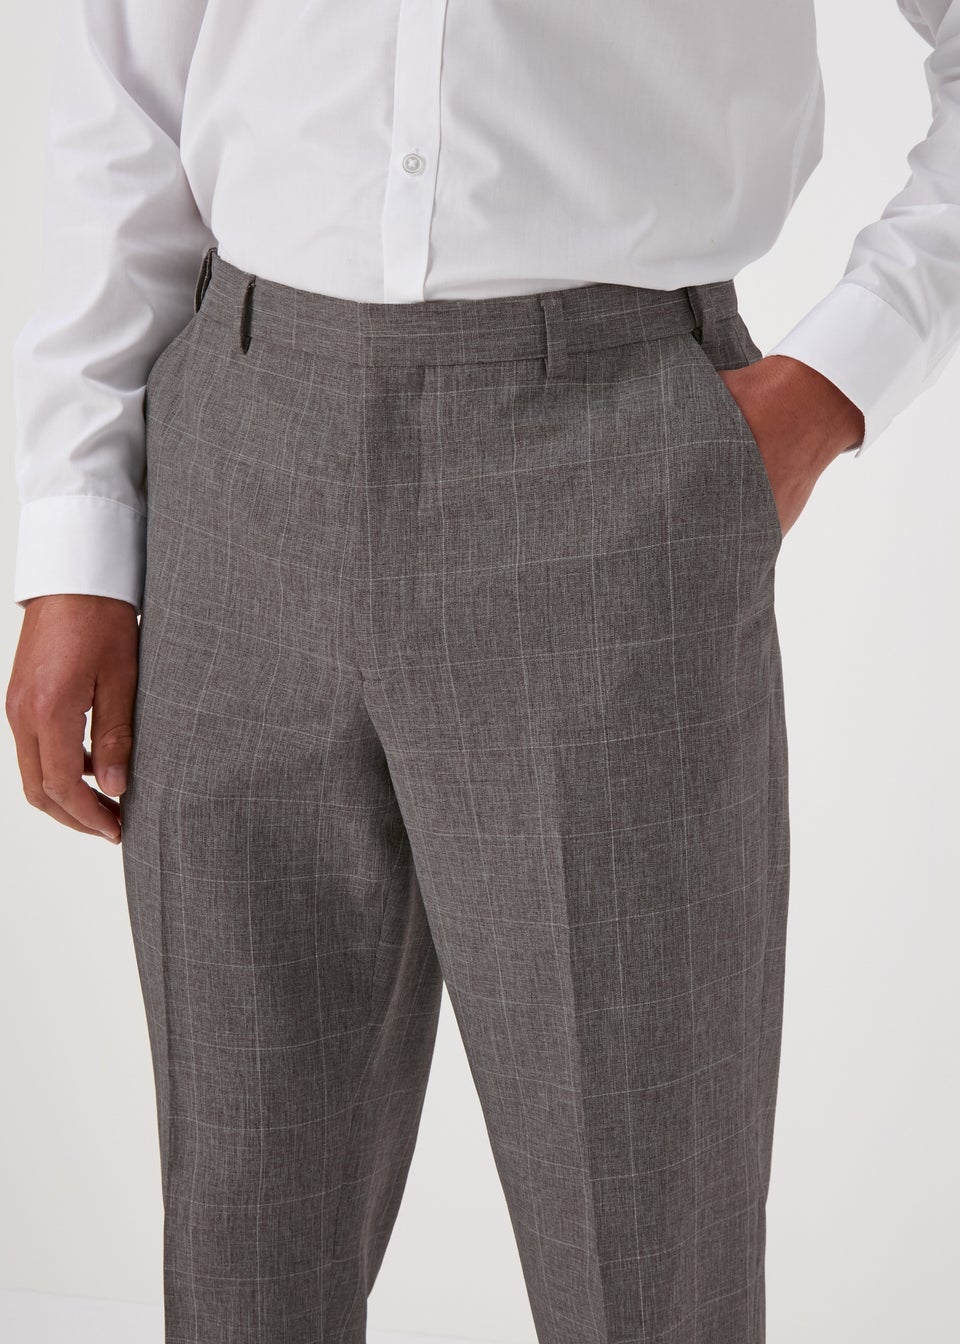 Taylor & Wright Grey Window Pane Flexiwaist Trousers